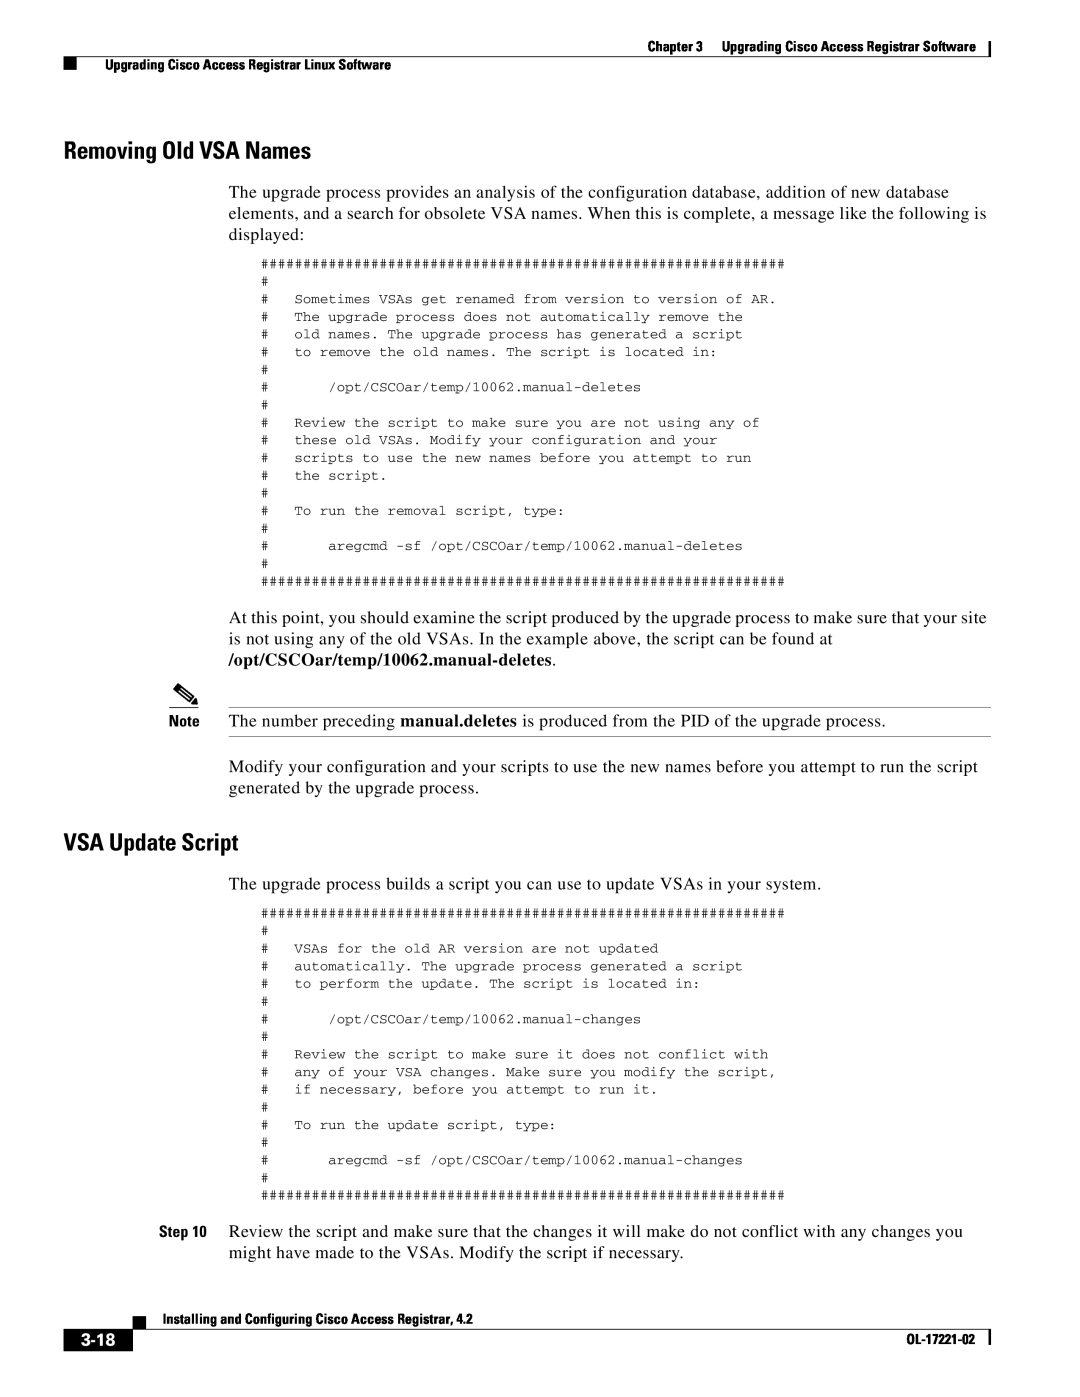 Cisco Systems 4.2 manual 3-18, Removing Old VSA Names, VSA Update Script, Upgrading Cisco Access Registrar Software 